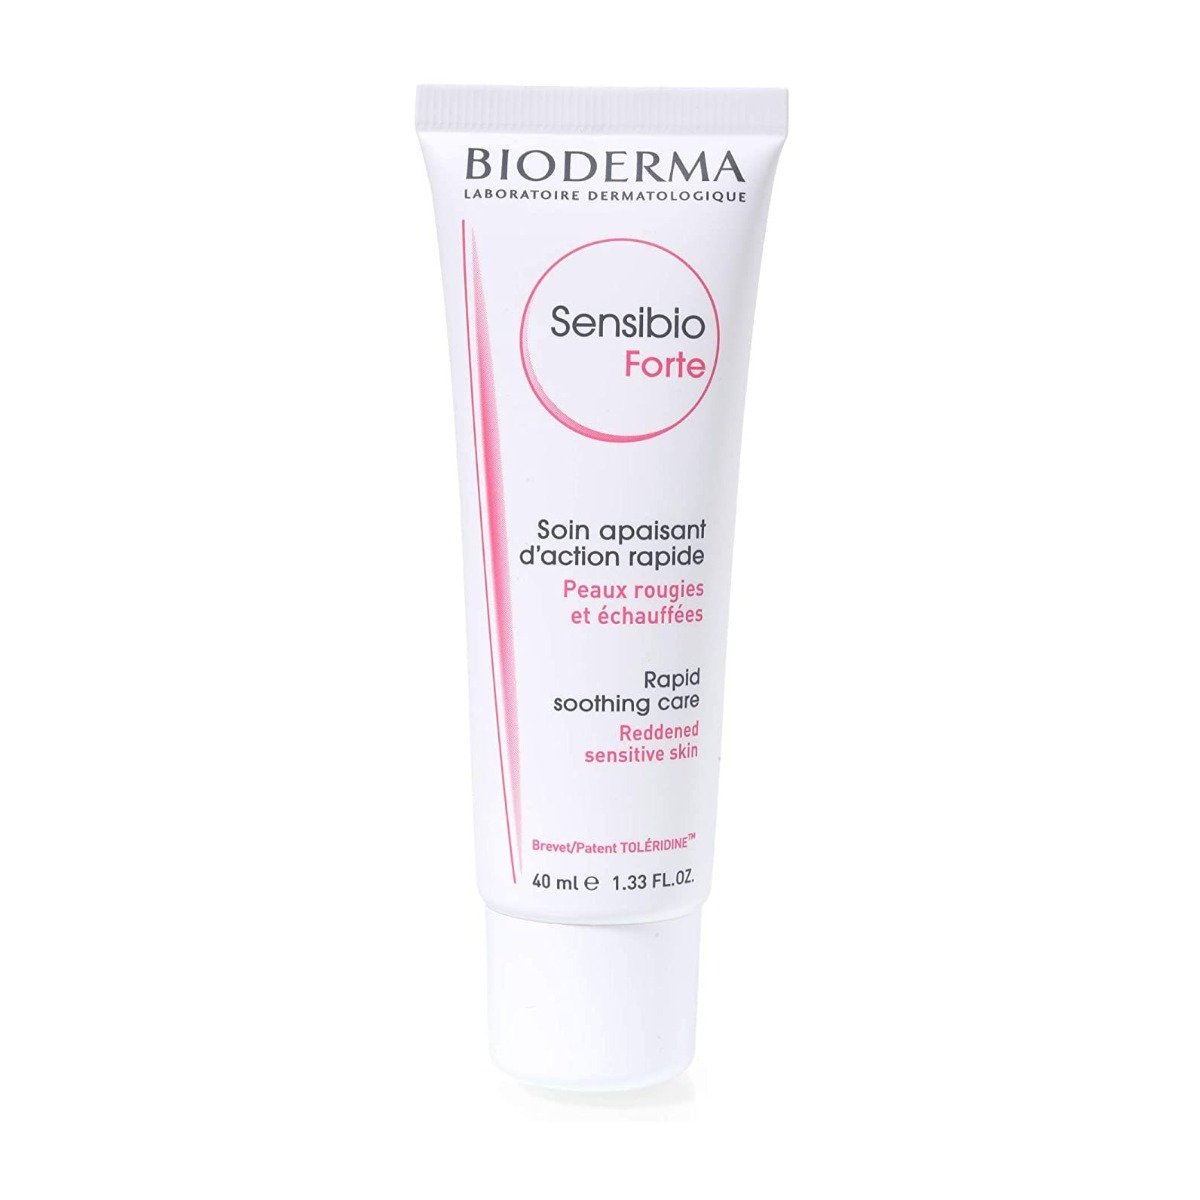 Bioderma Sensibio Forte Cream - Reddened Sensitive Skin 40ml - Bloom Pharmacy